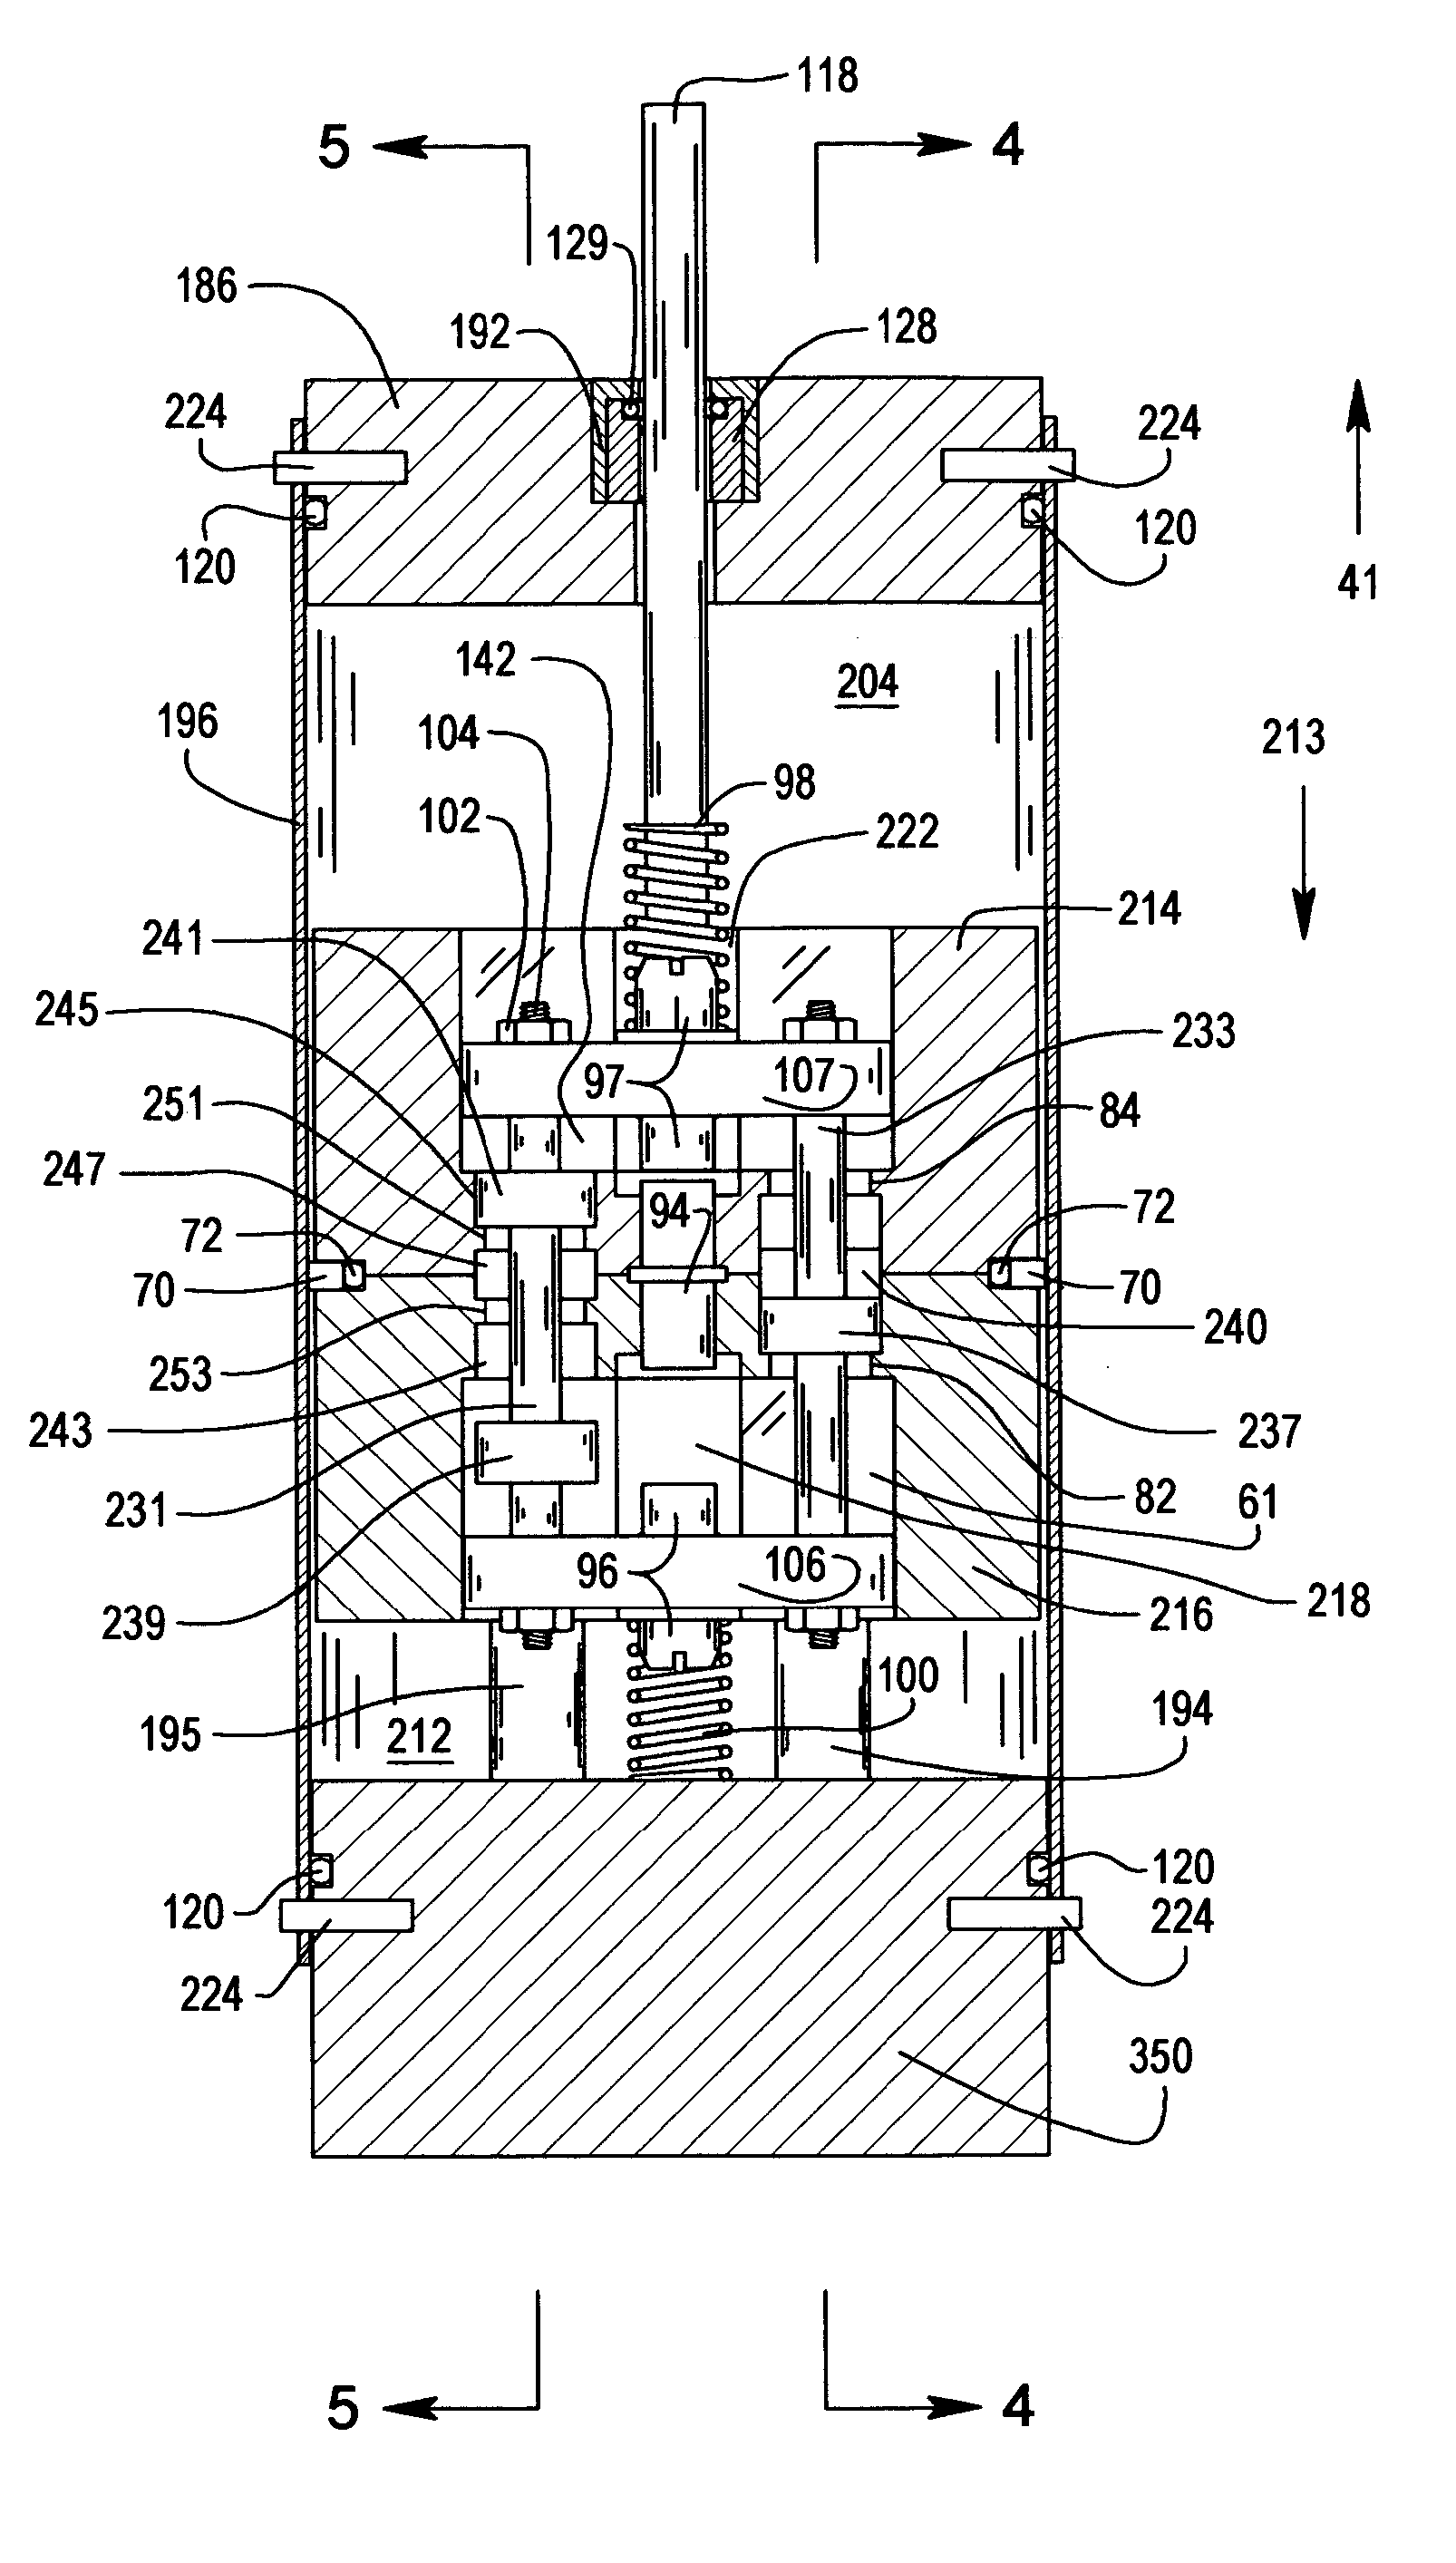 Combined piston fluid motor and pump